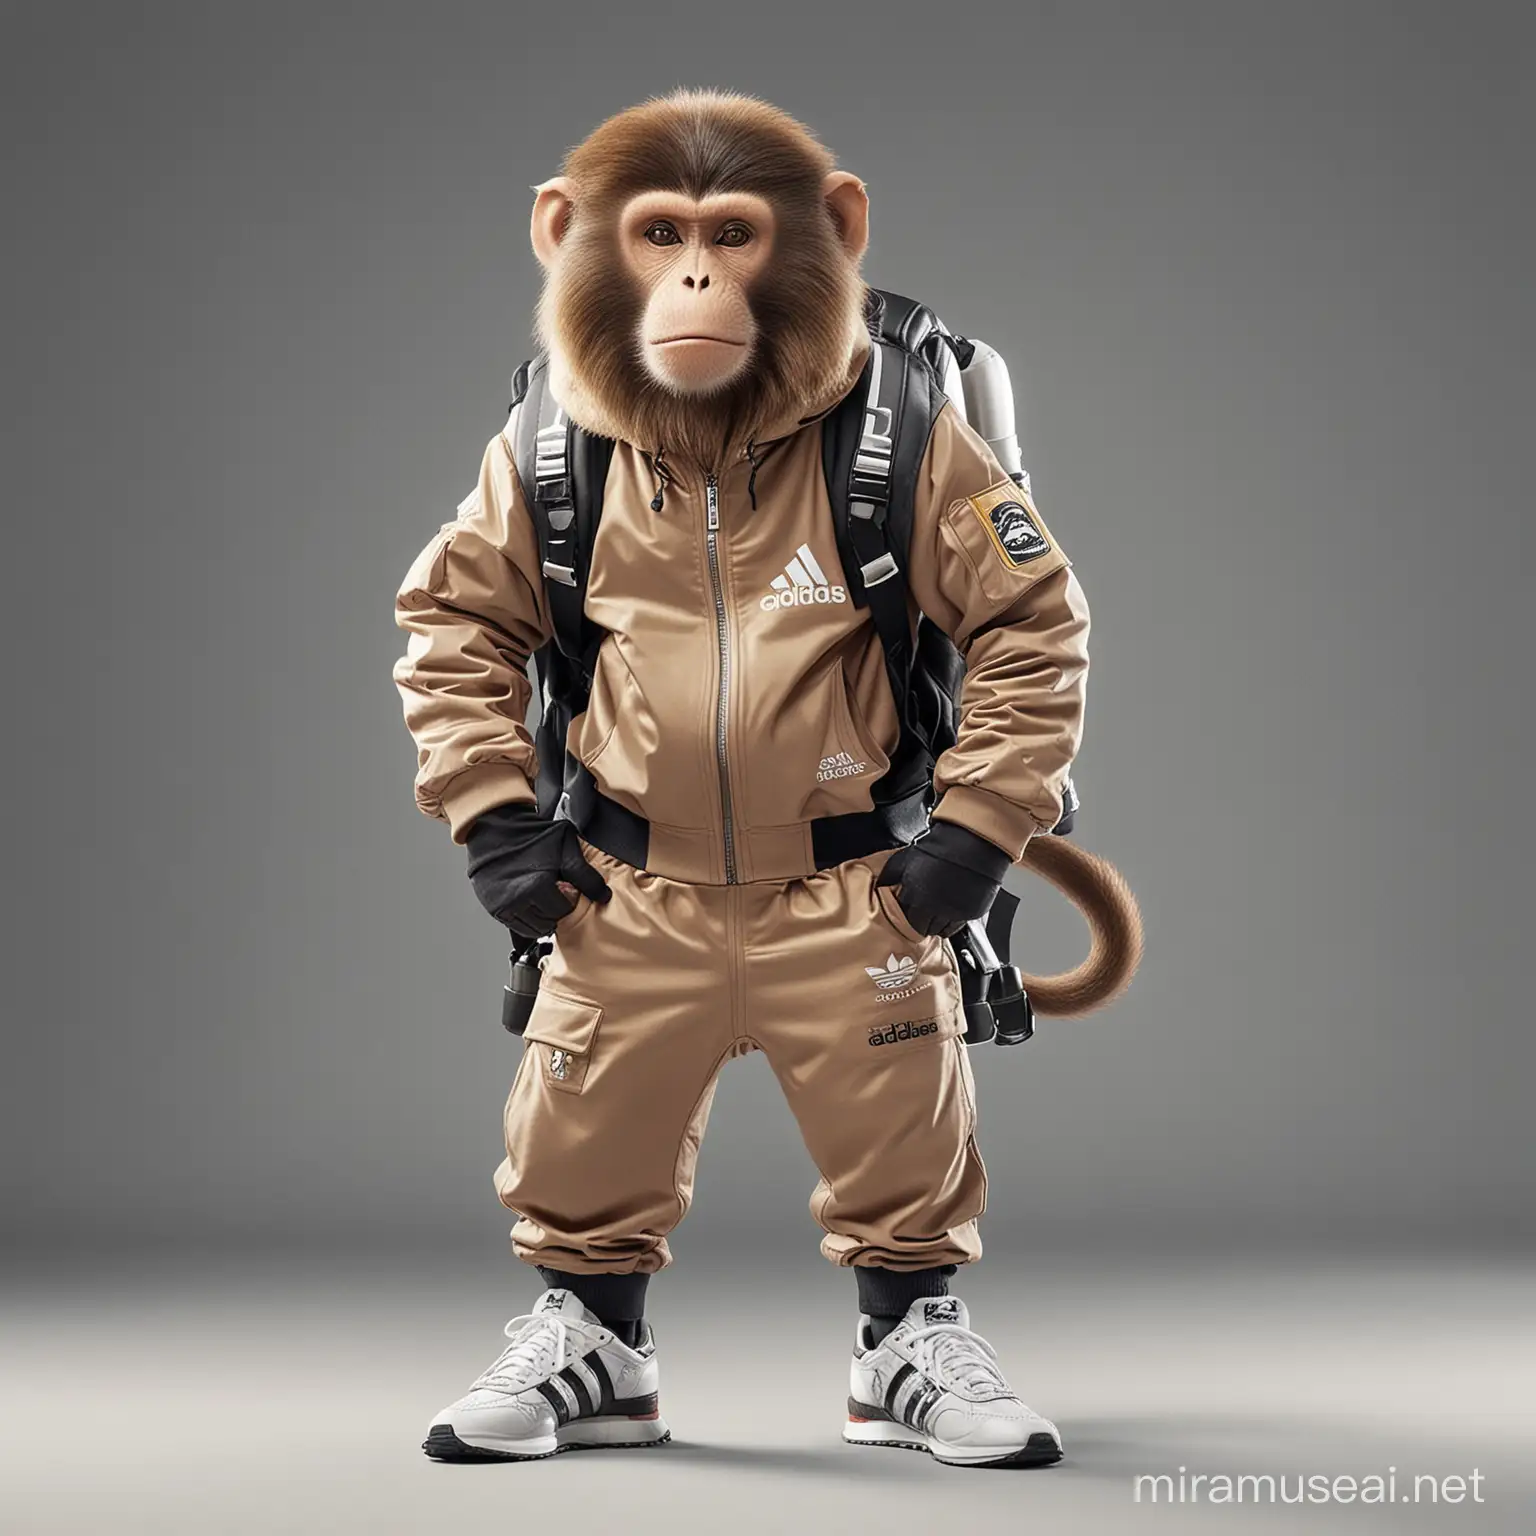 Adidas Tracksuit Monkey with Jetpack